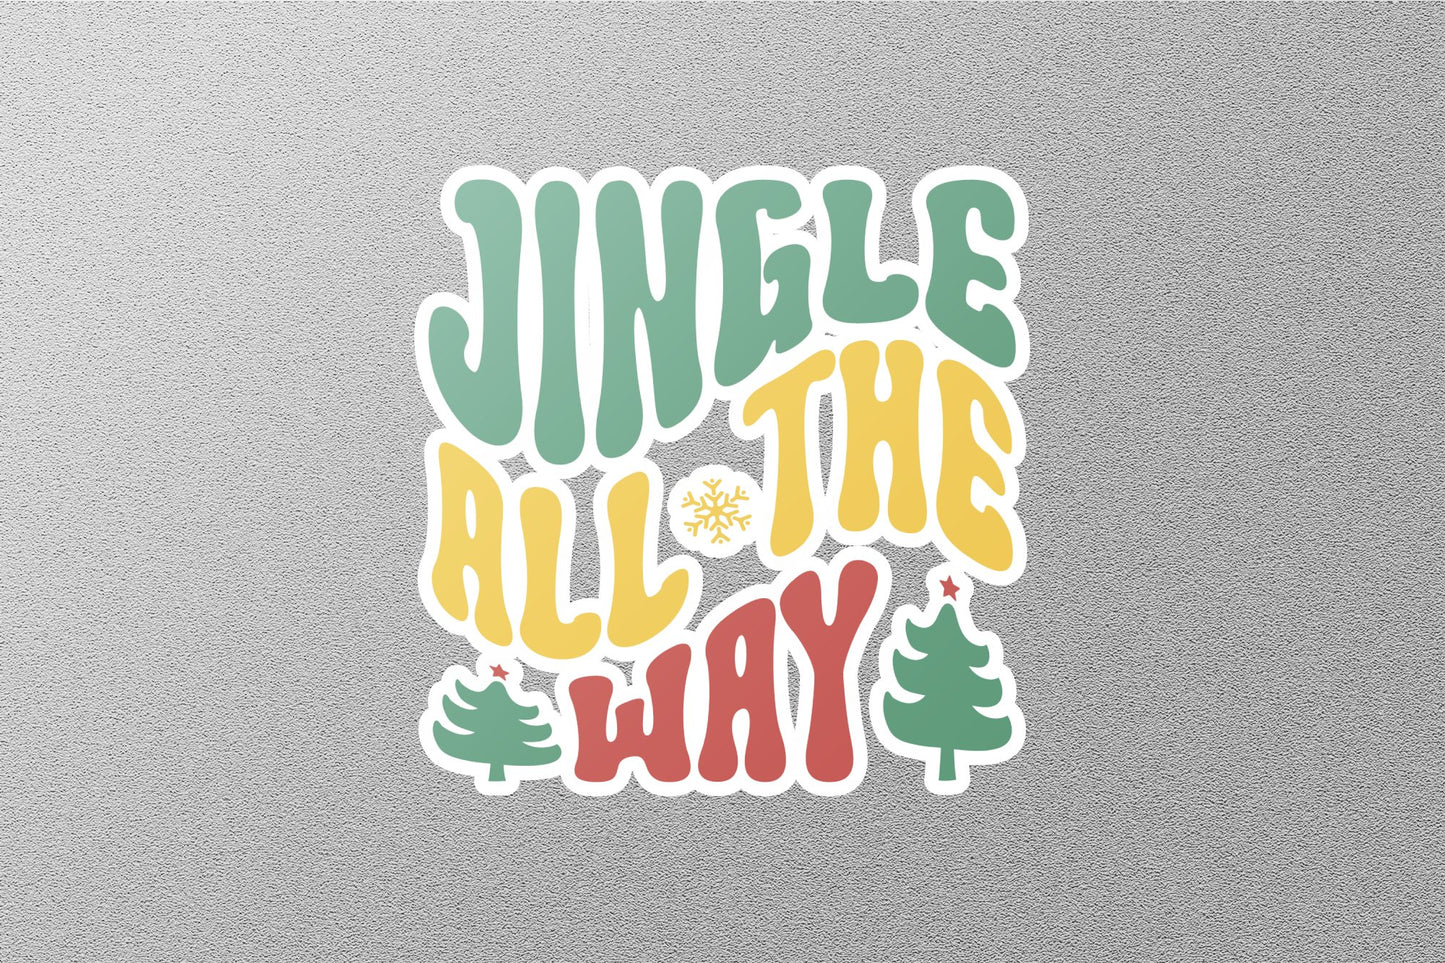 Jingle All The Time Christmas Sticker